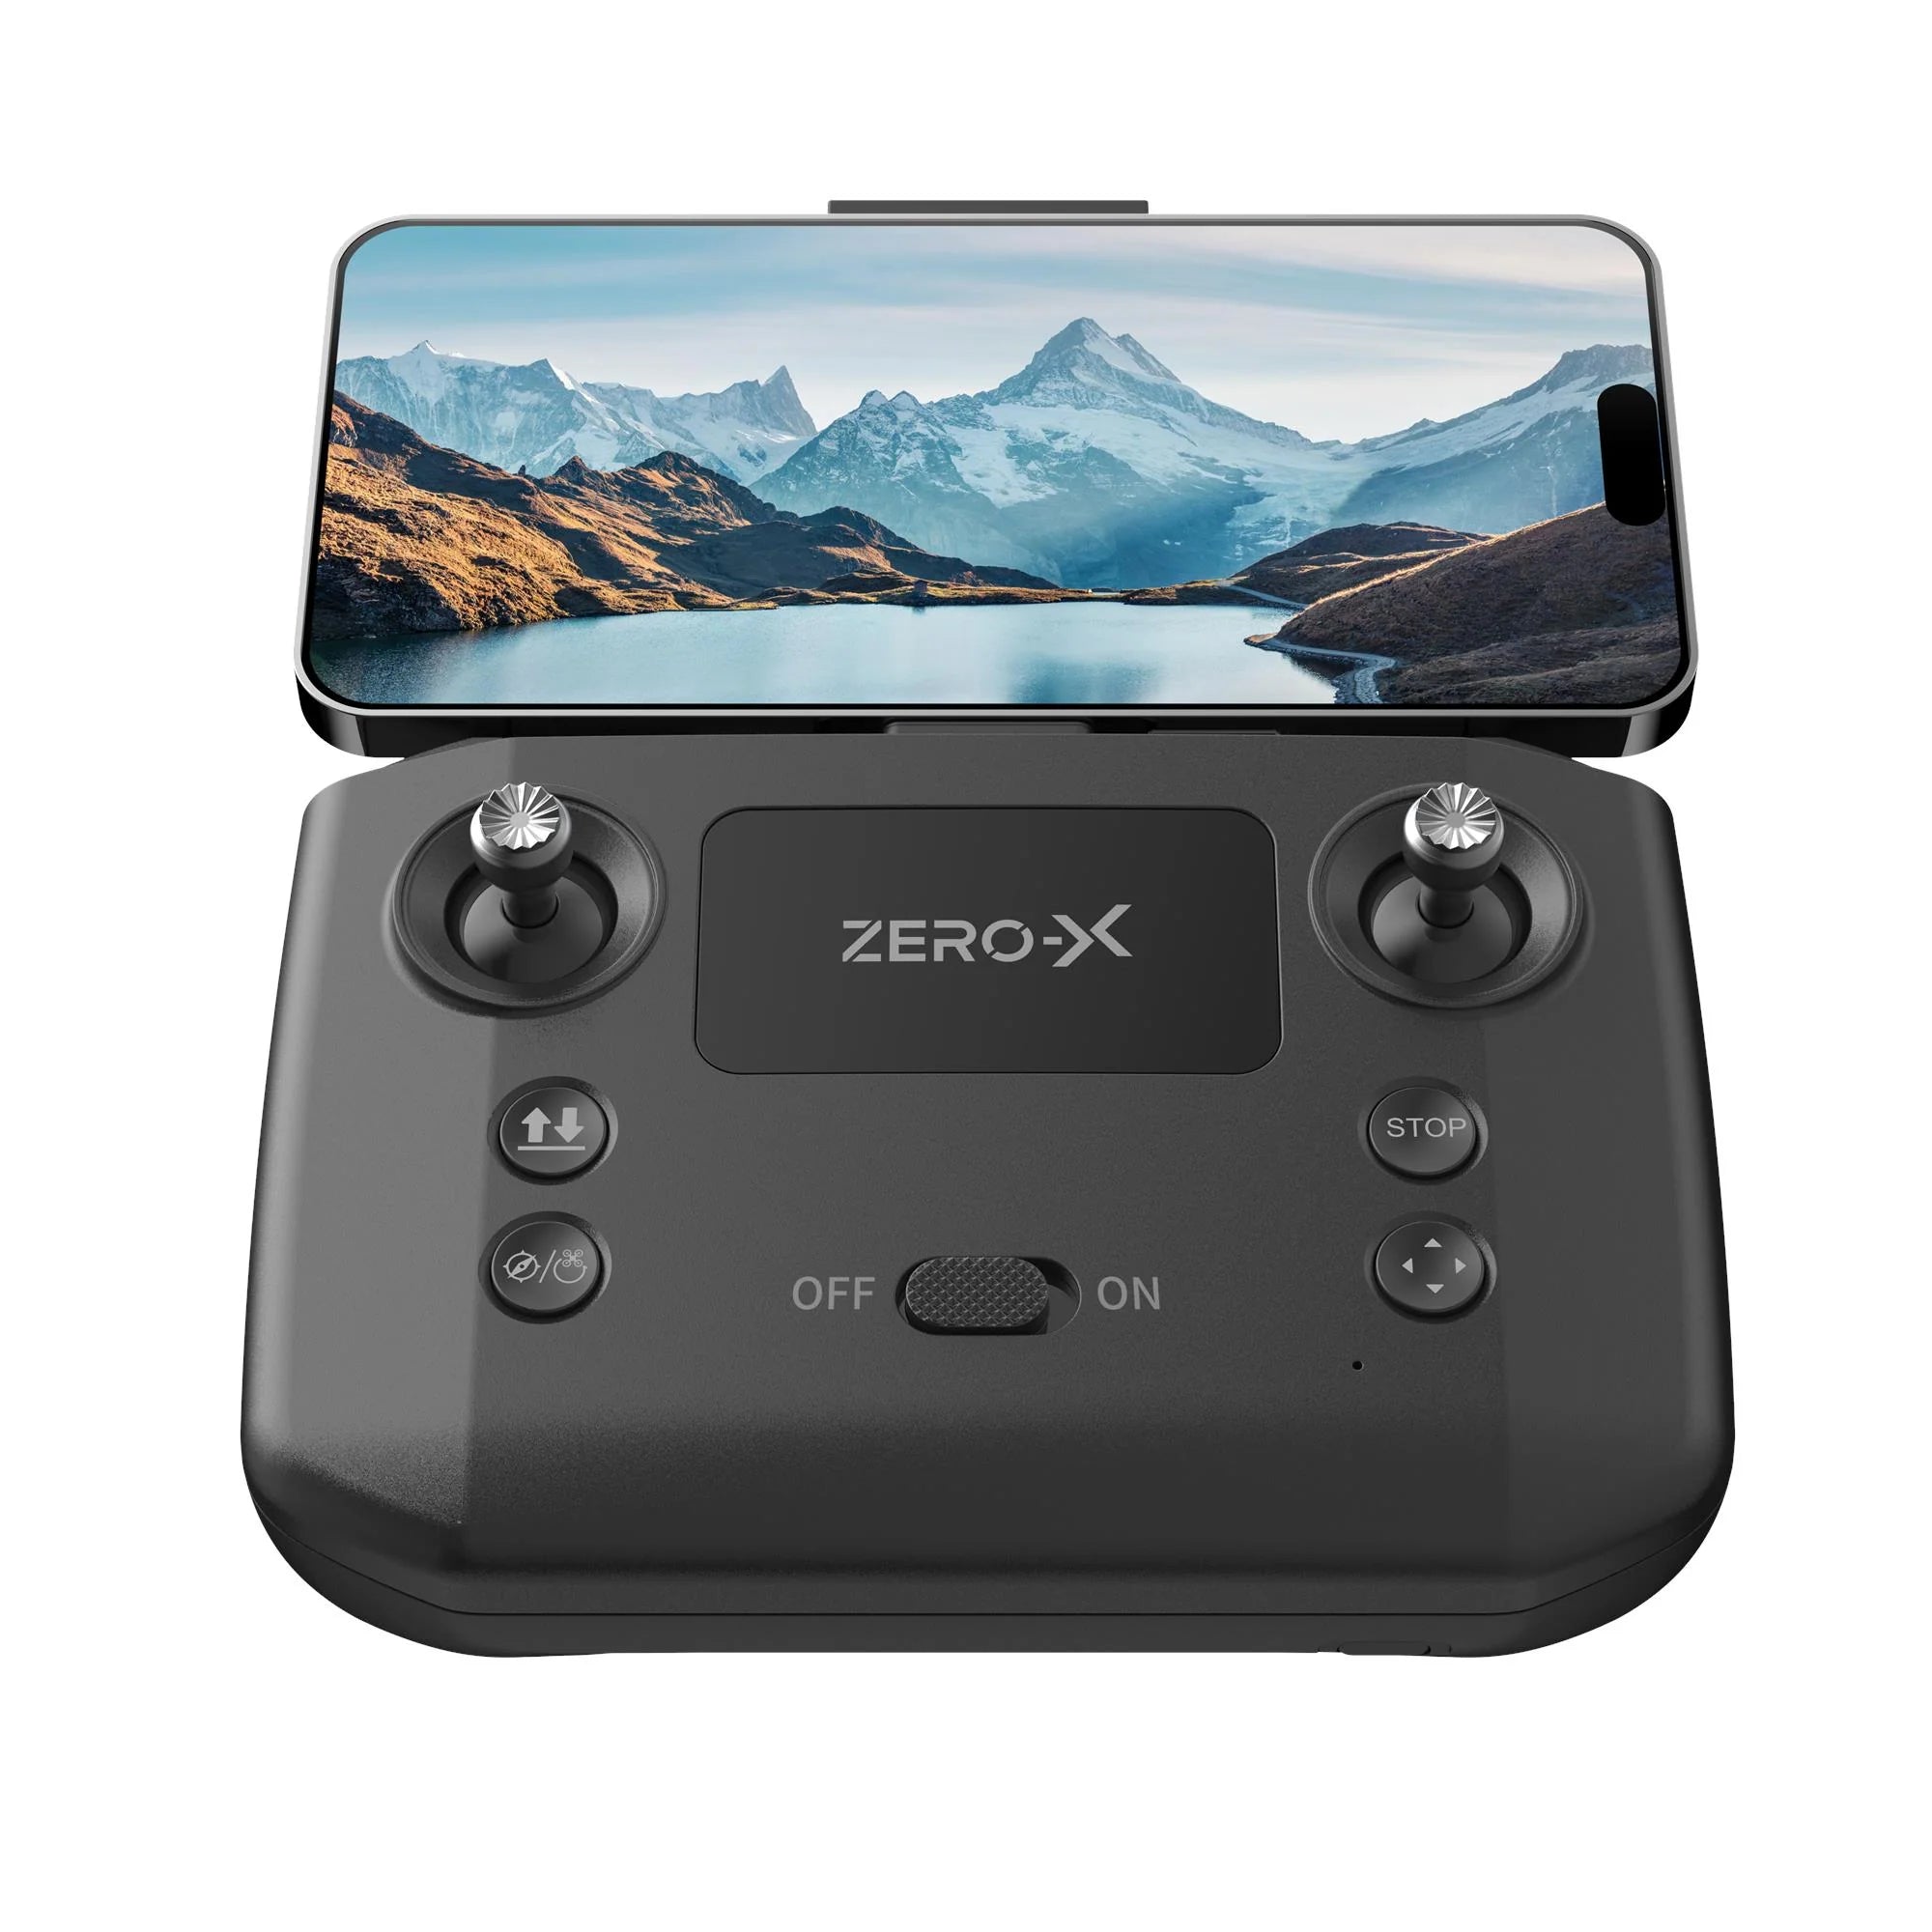 Zero-X Glyden Full HD Drone with WiFi